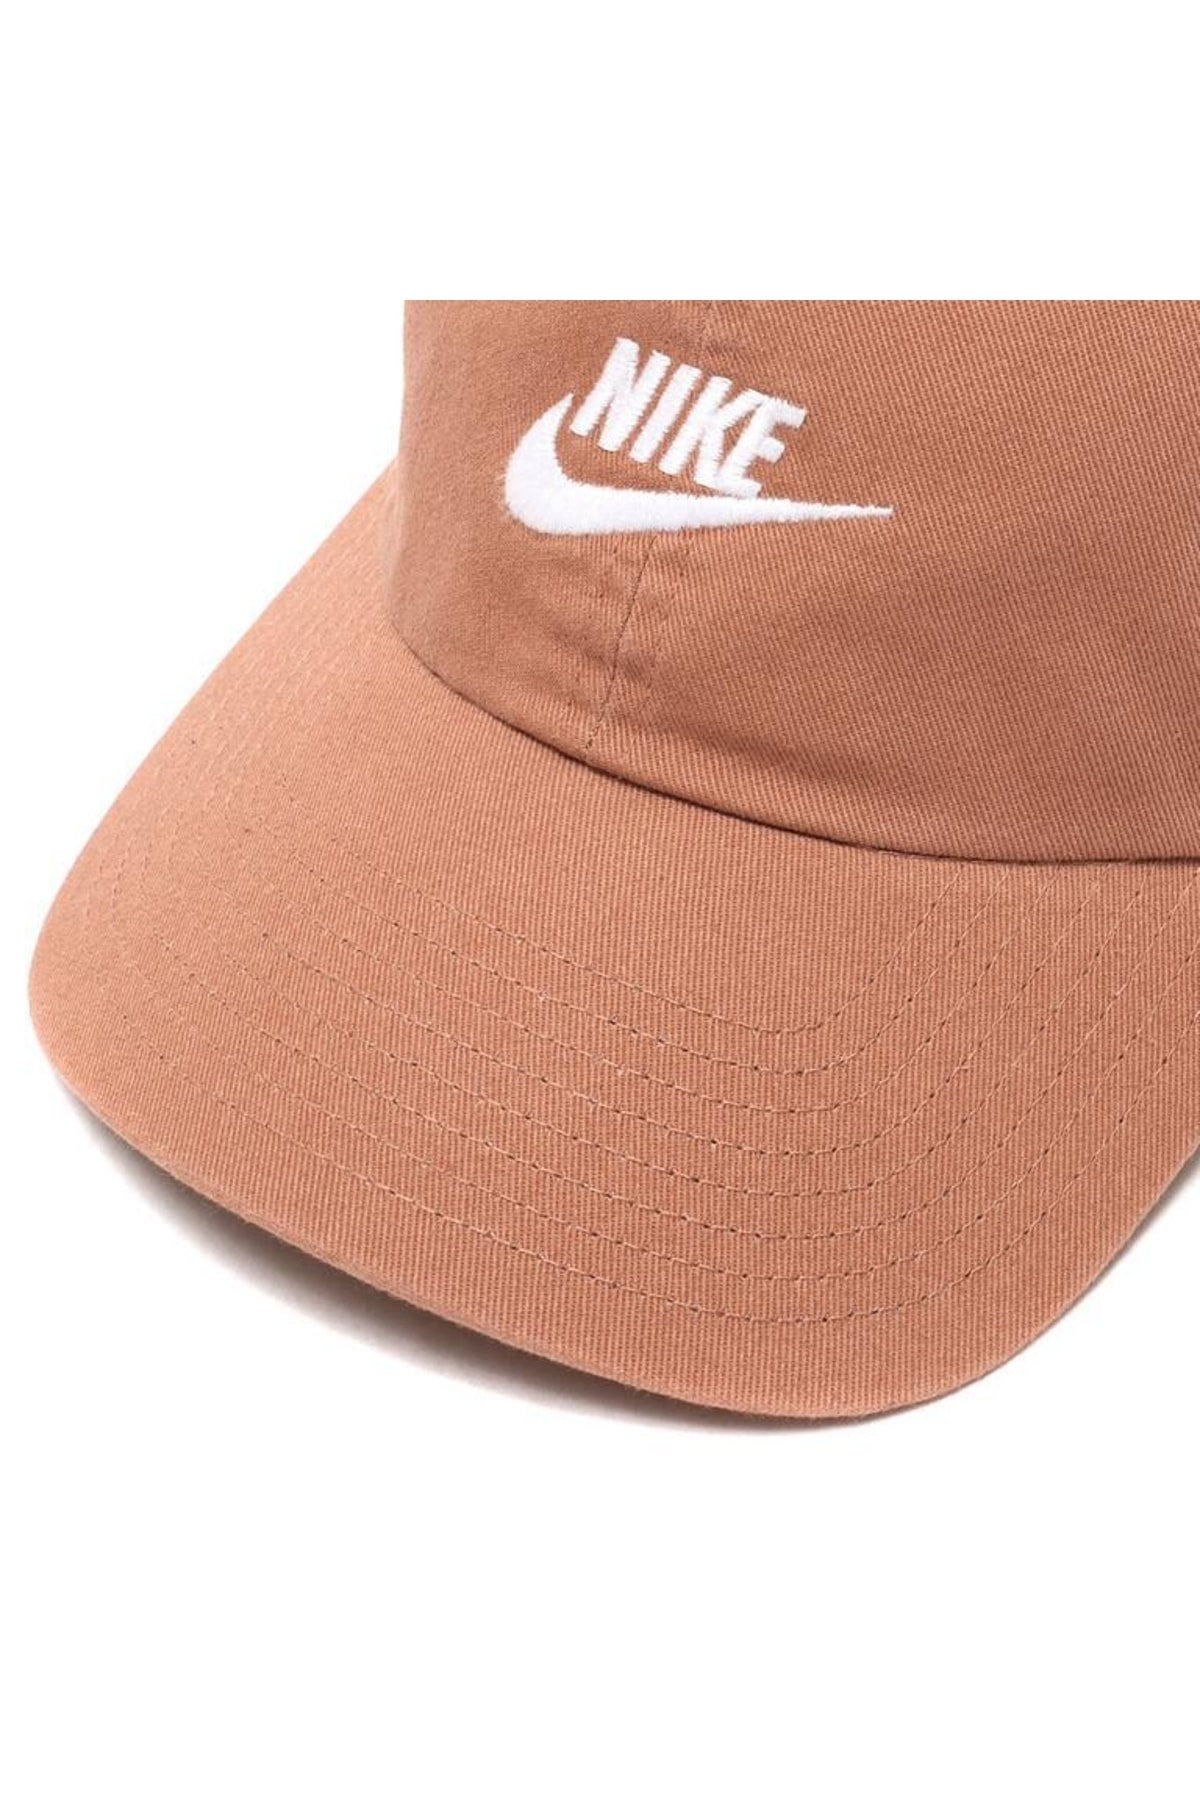 Nike کلاه لباس های ورزشی Heritage86 Futura Washed یونیسکس